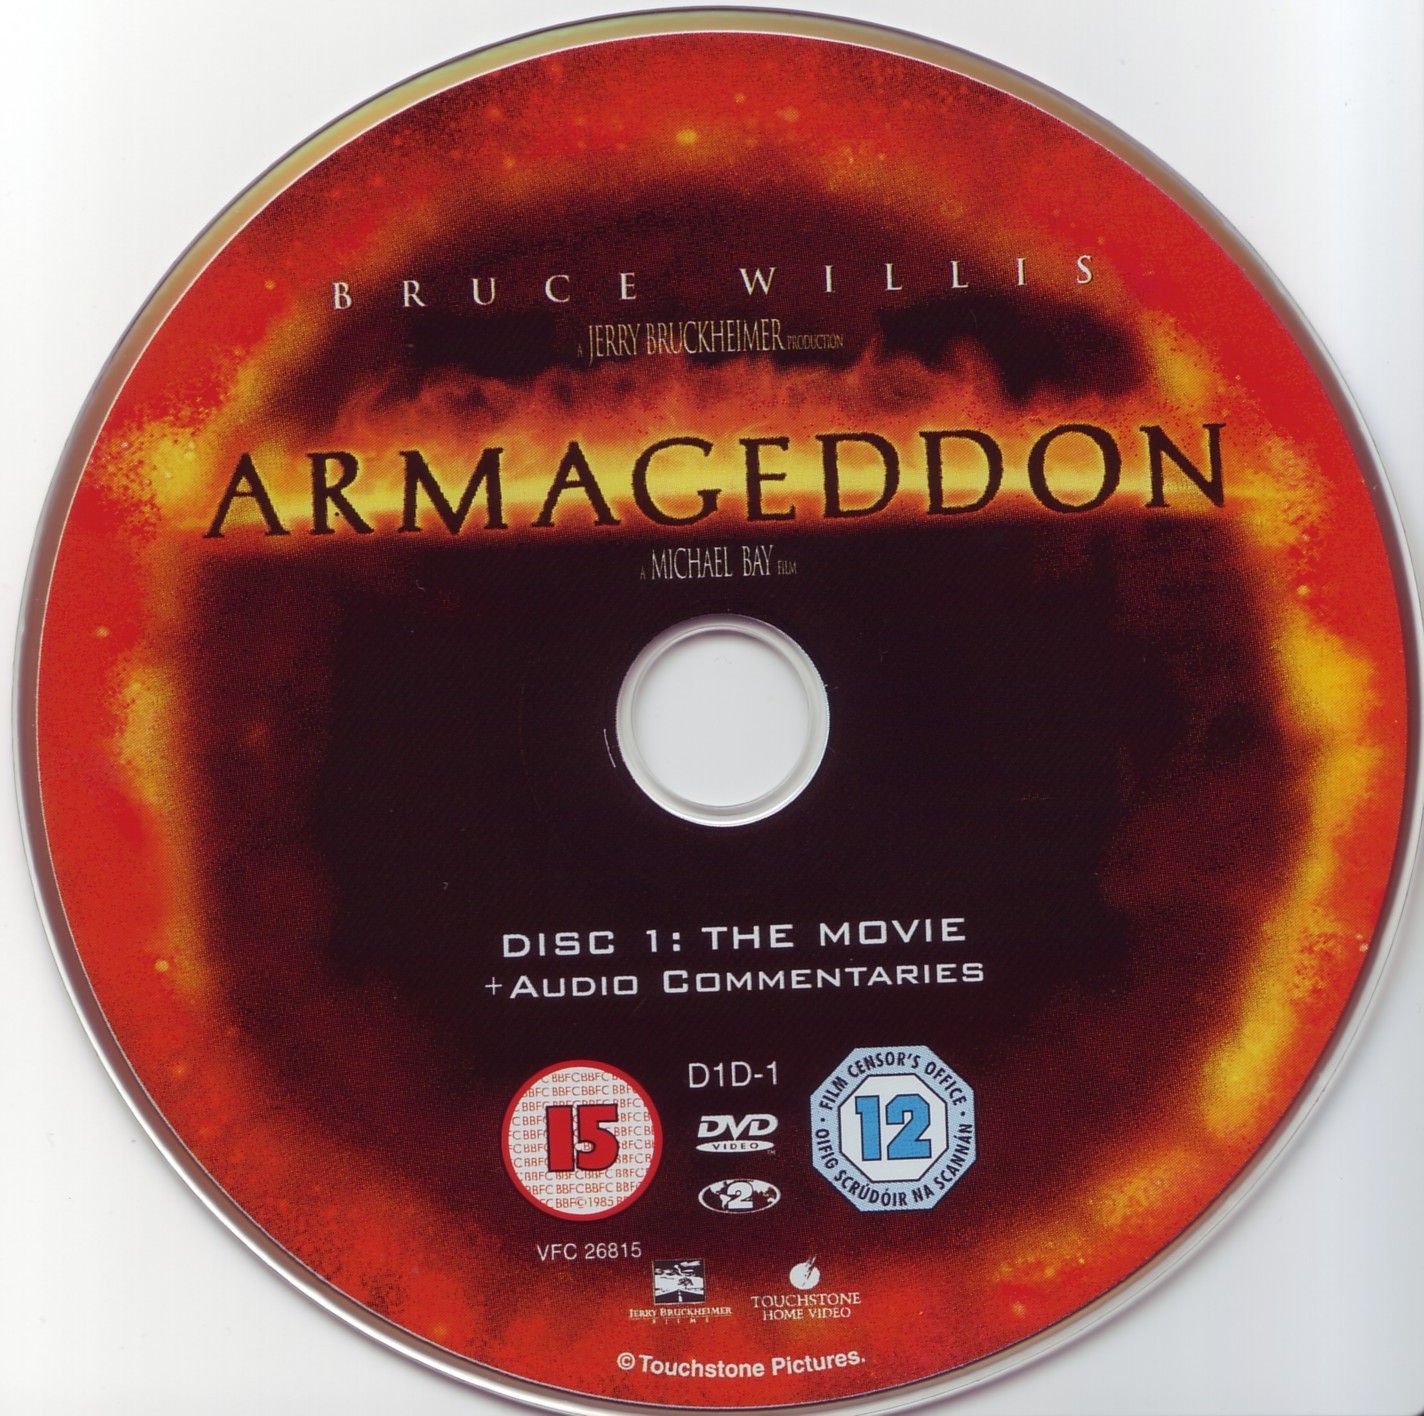 Саундтрек к фильму про. Армагеддон 1998 DVD Cover. Armageddon 1998 DVD Cover. OST Армагеддон. Треки к фильму Армагеддон.